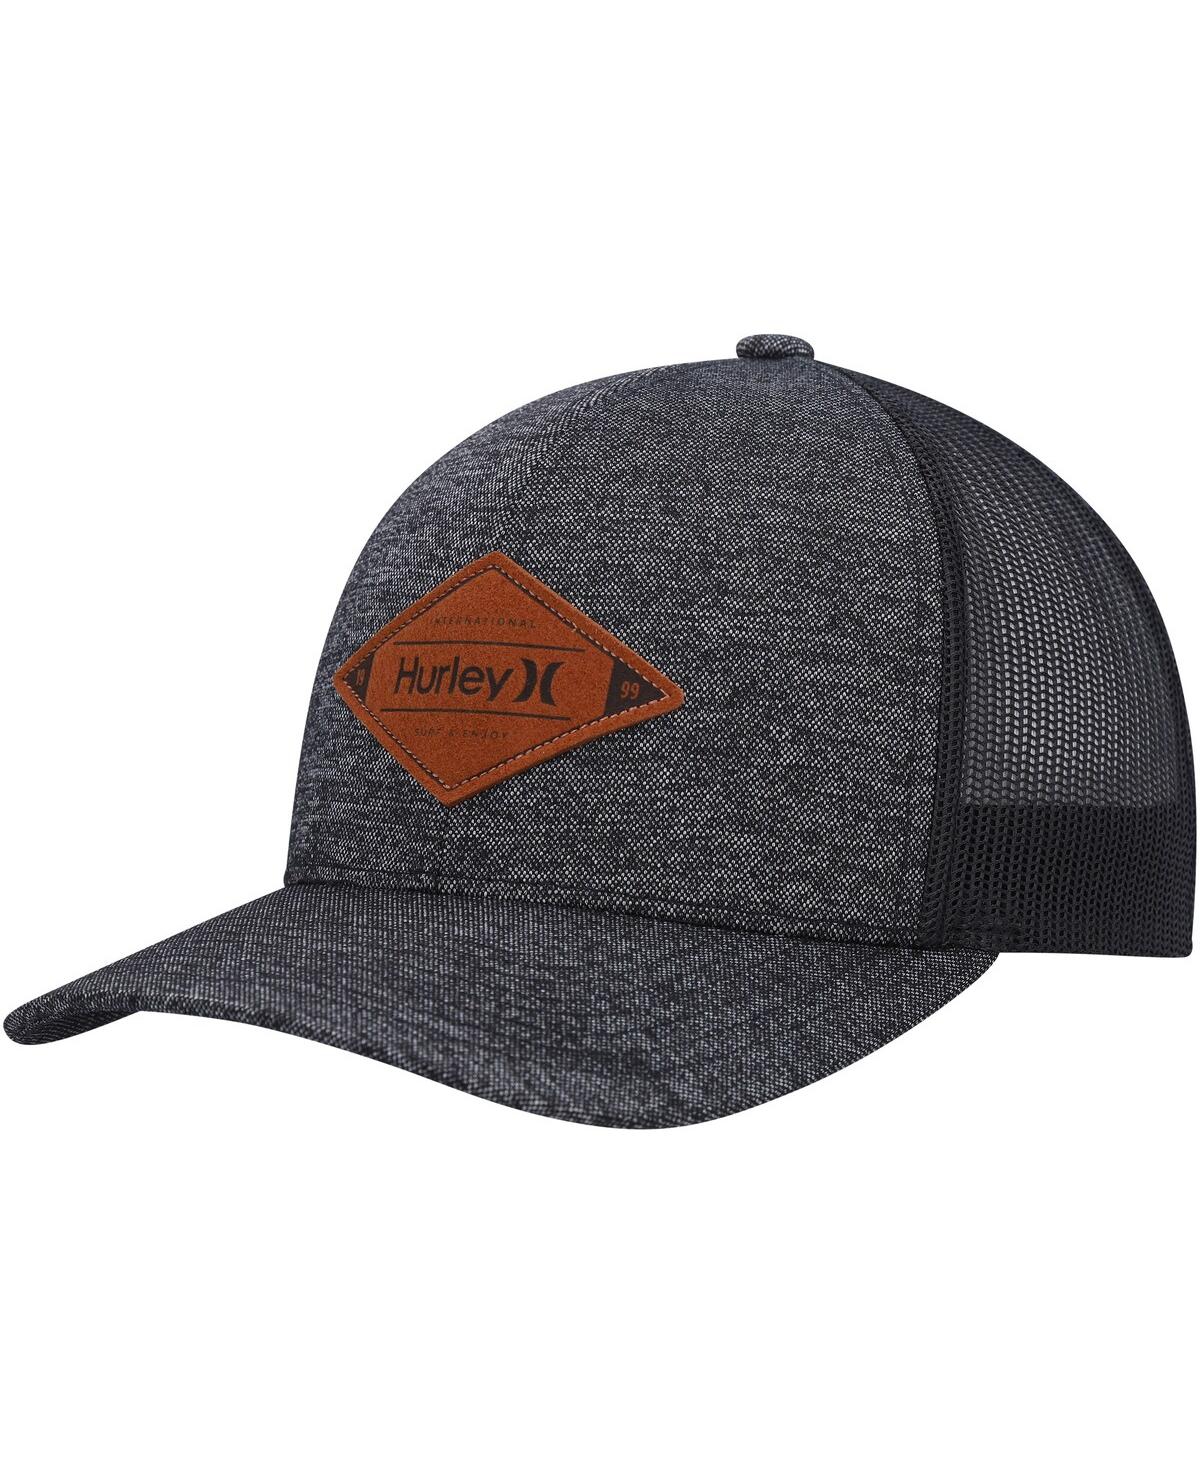 Men's Hurley Charcoal, Black Mesa Trucker Snapback Hat - Charcoal, Black